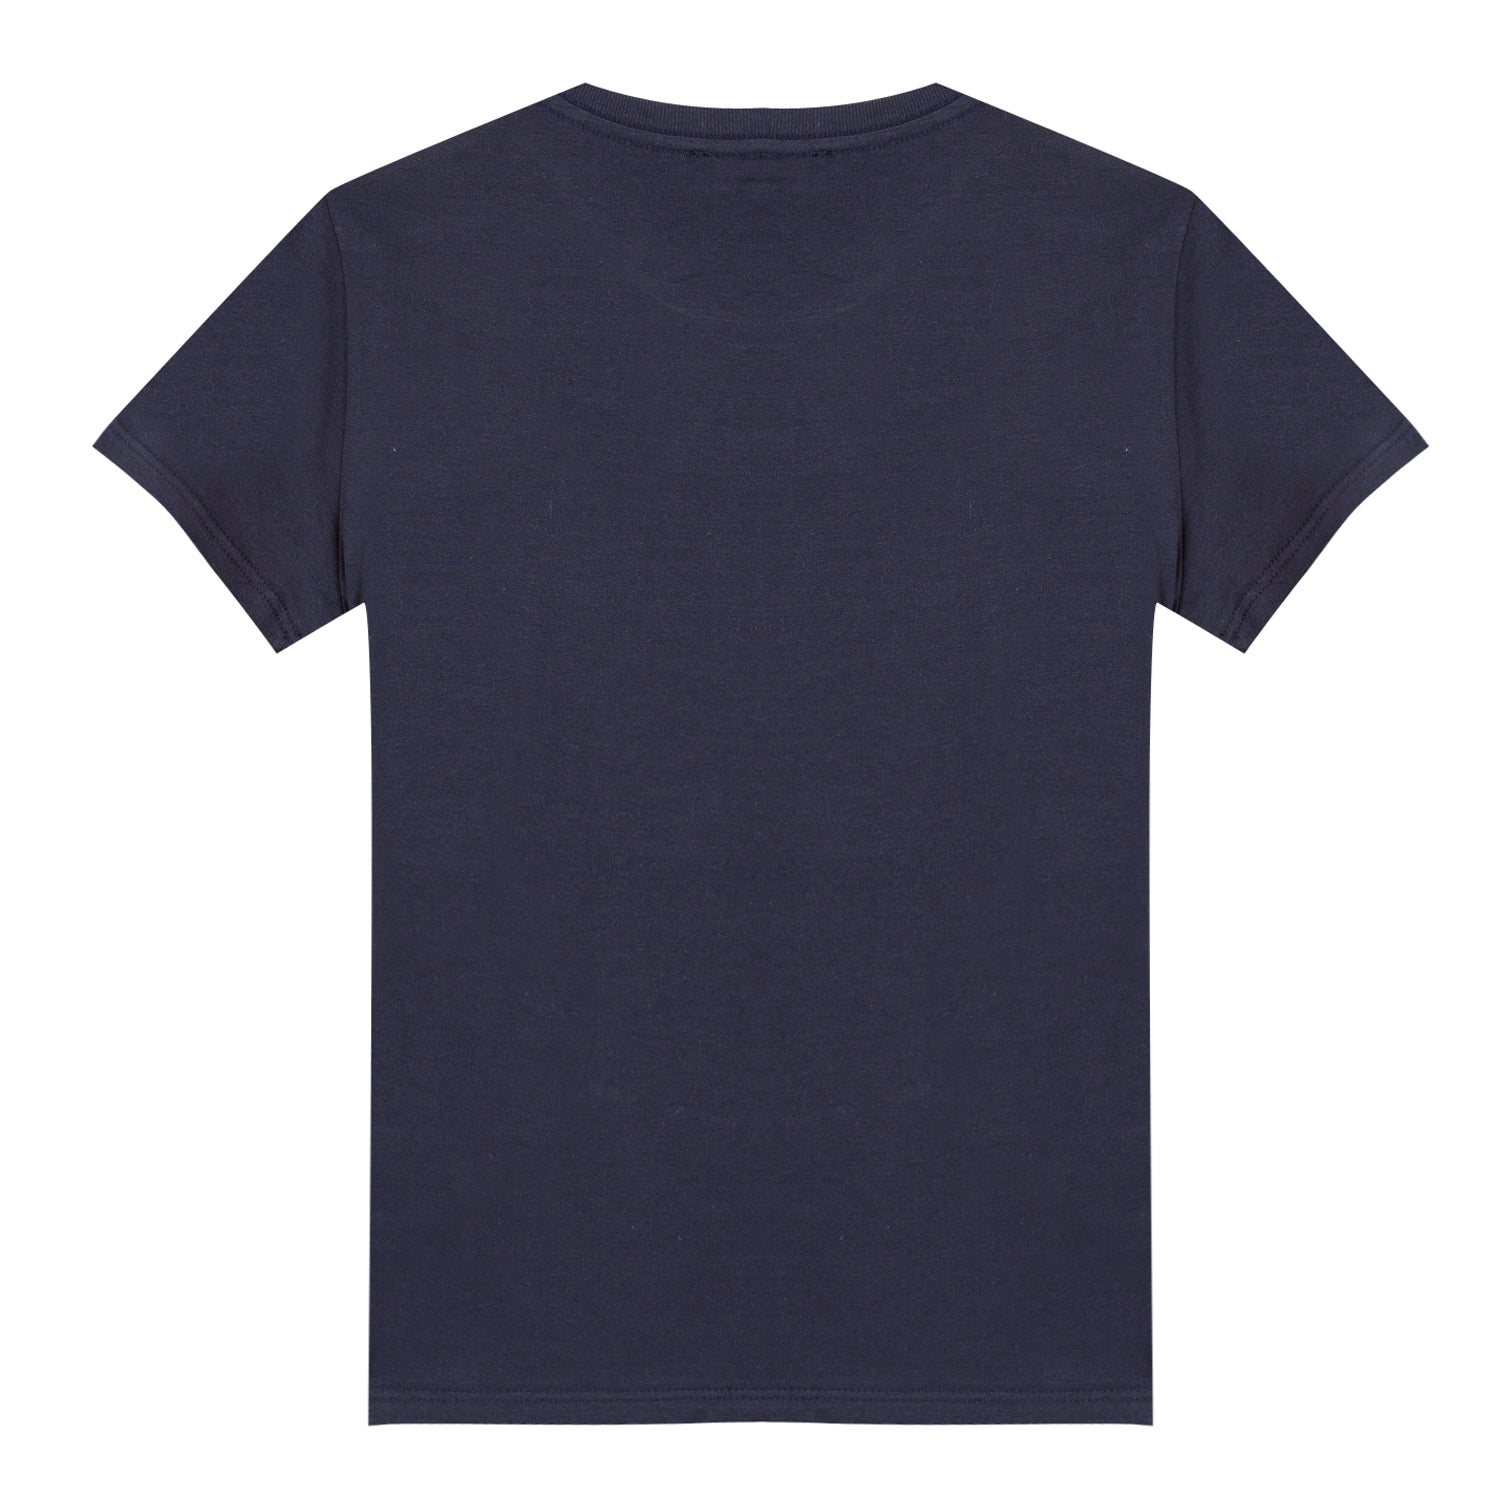 Boys Dark Blue Printed Cotton T-shirt